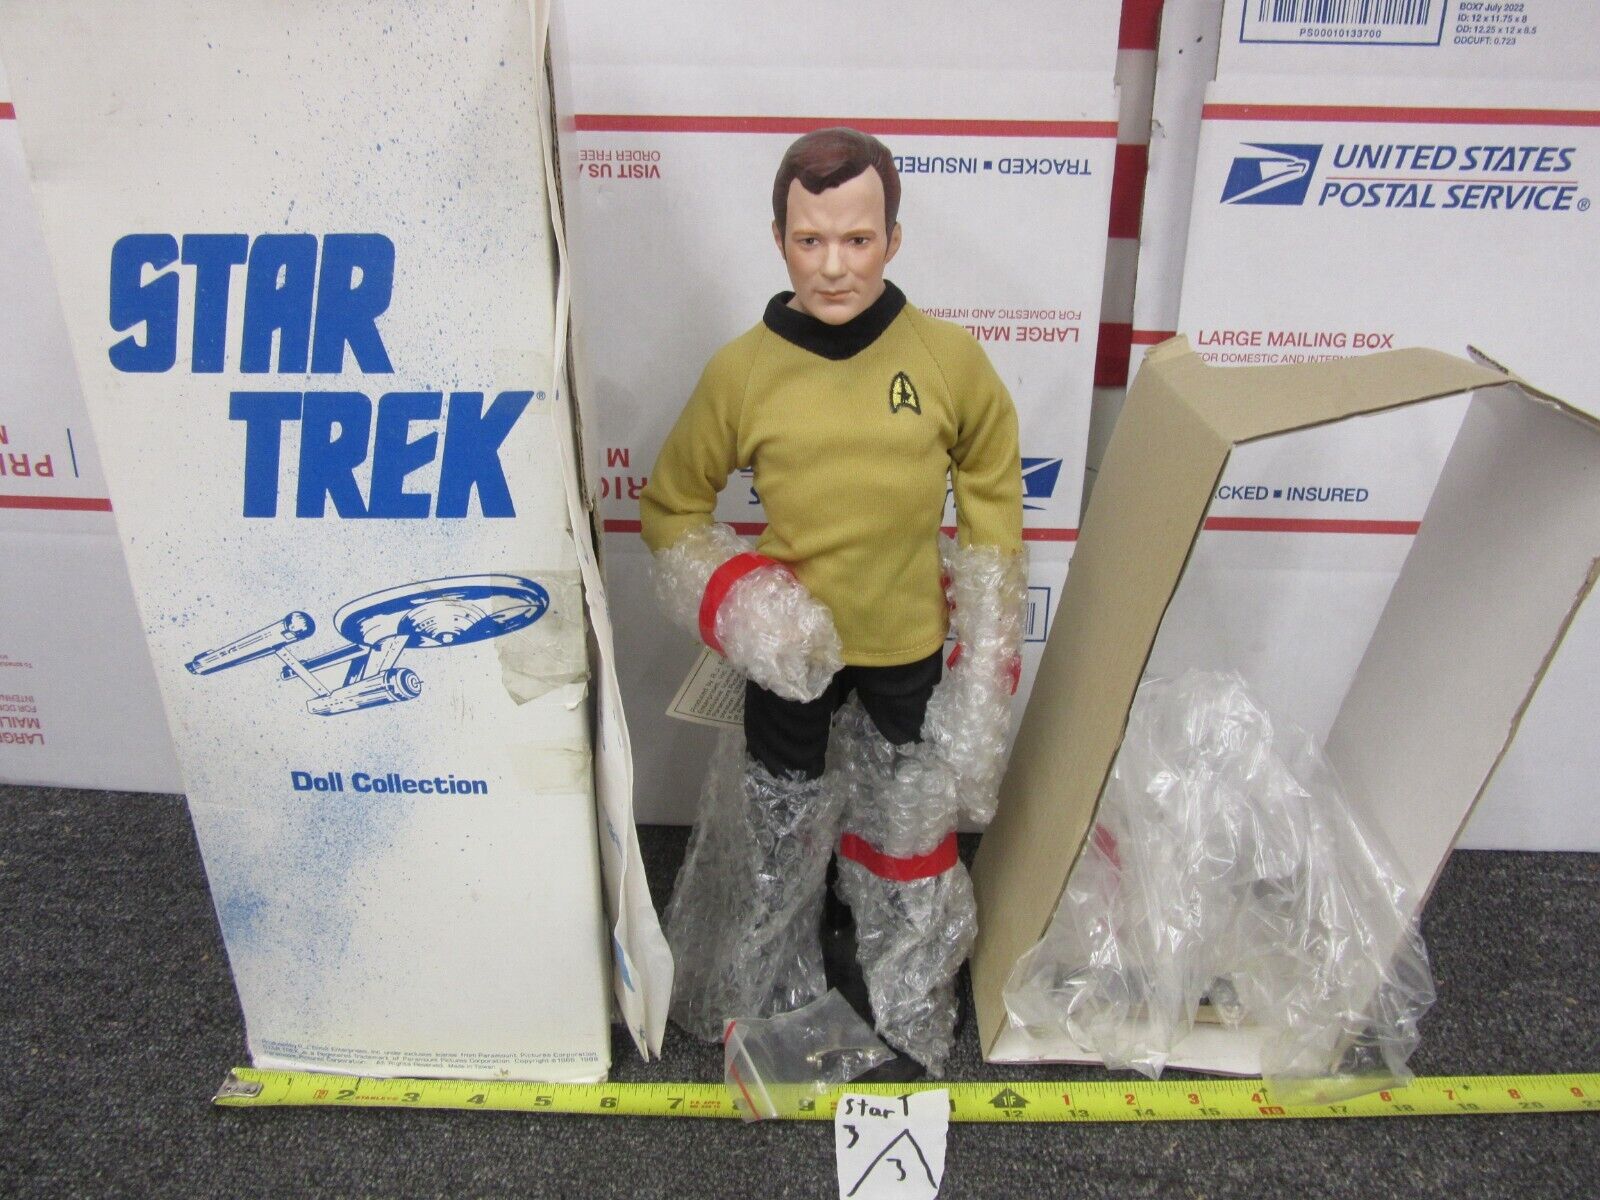 Star Trek Doll Captain Kirk from Hamilton Collection